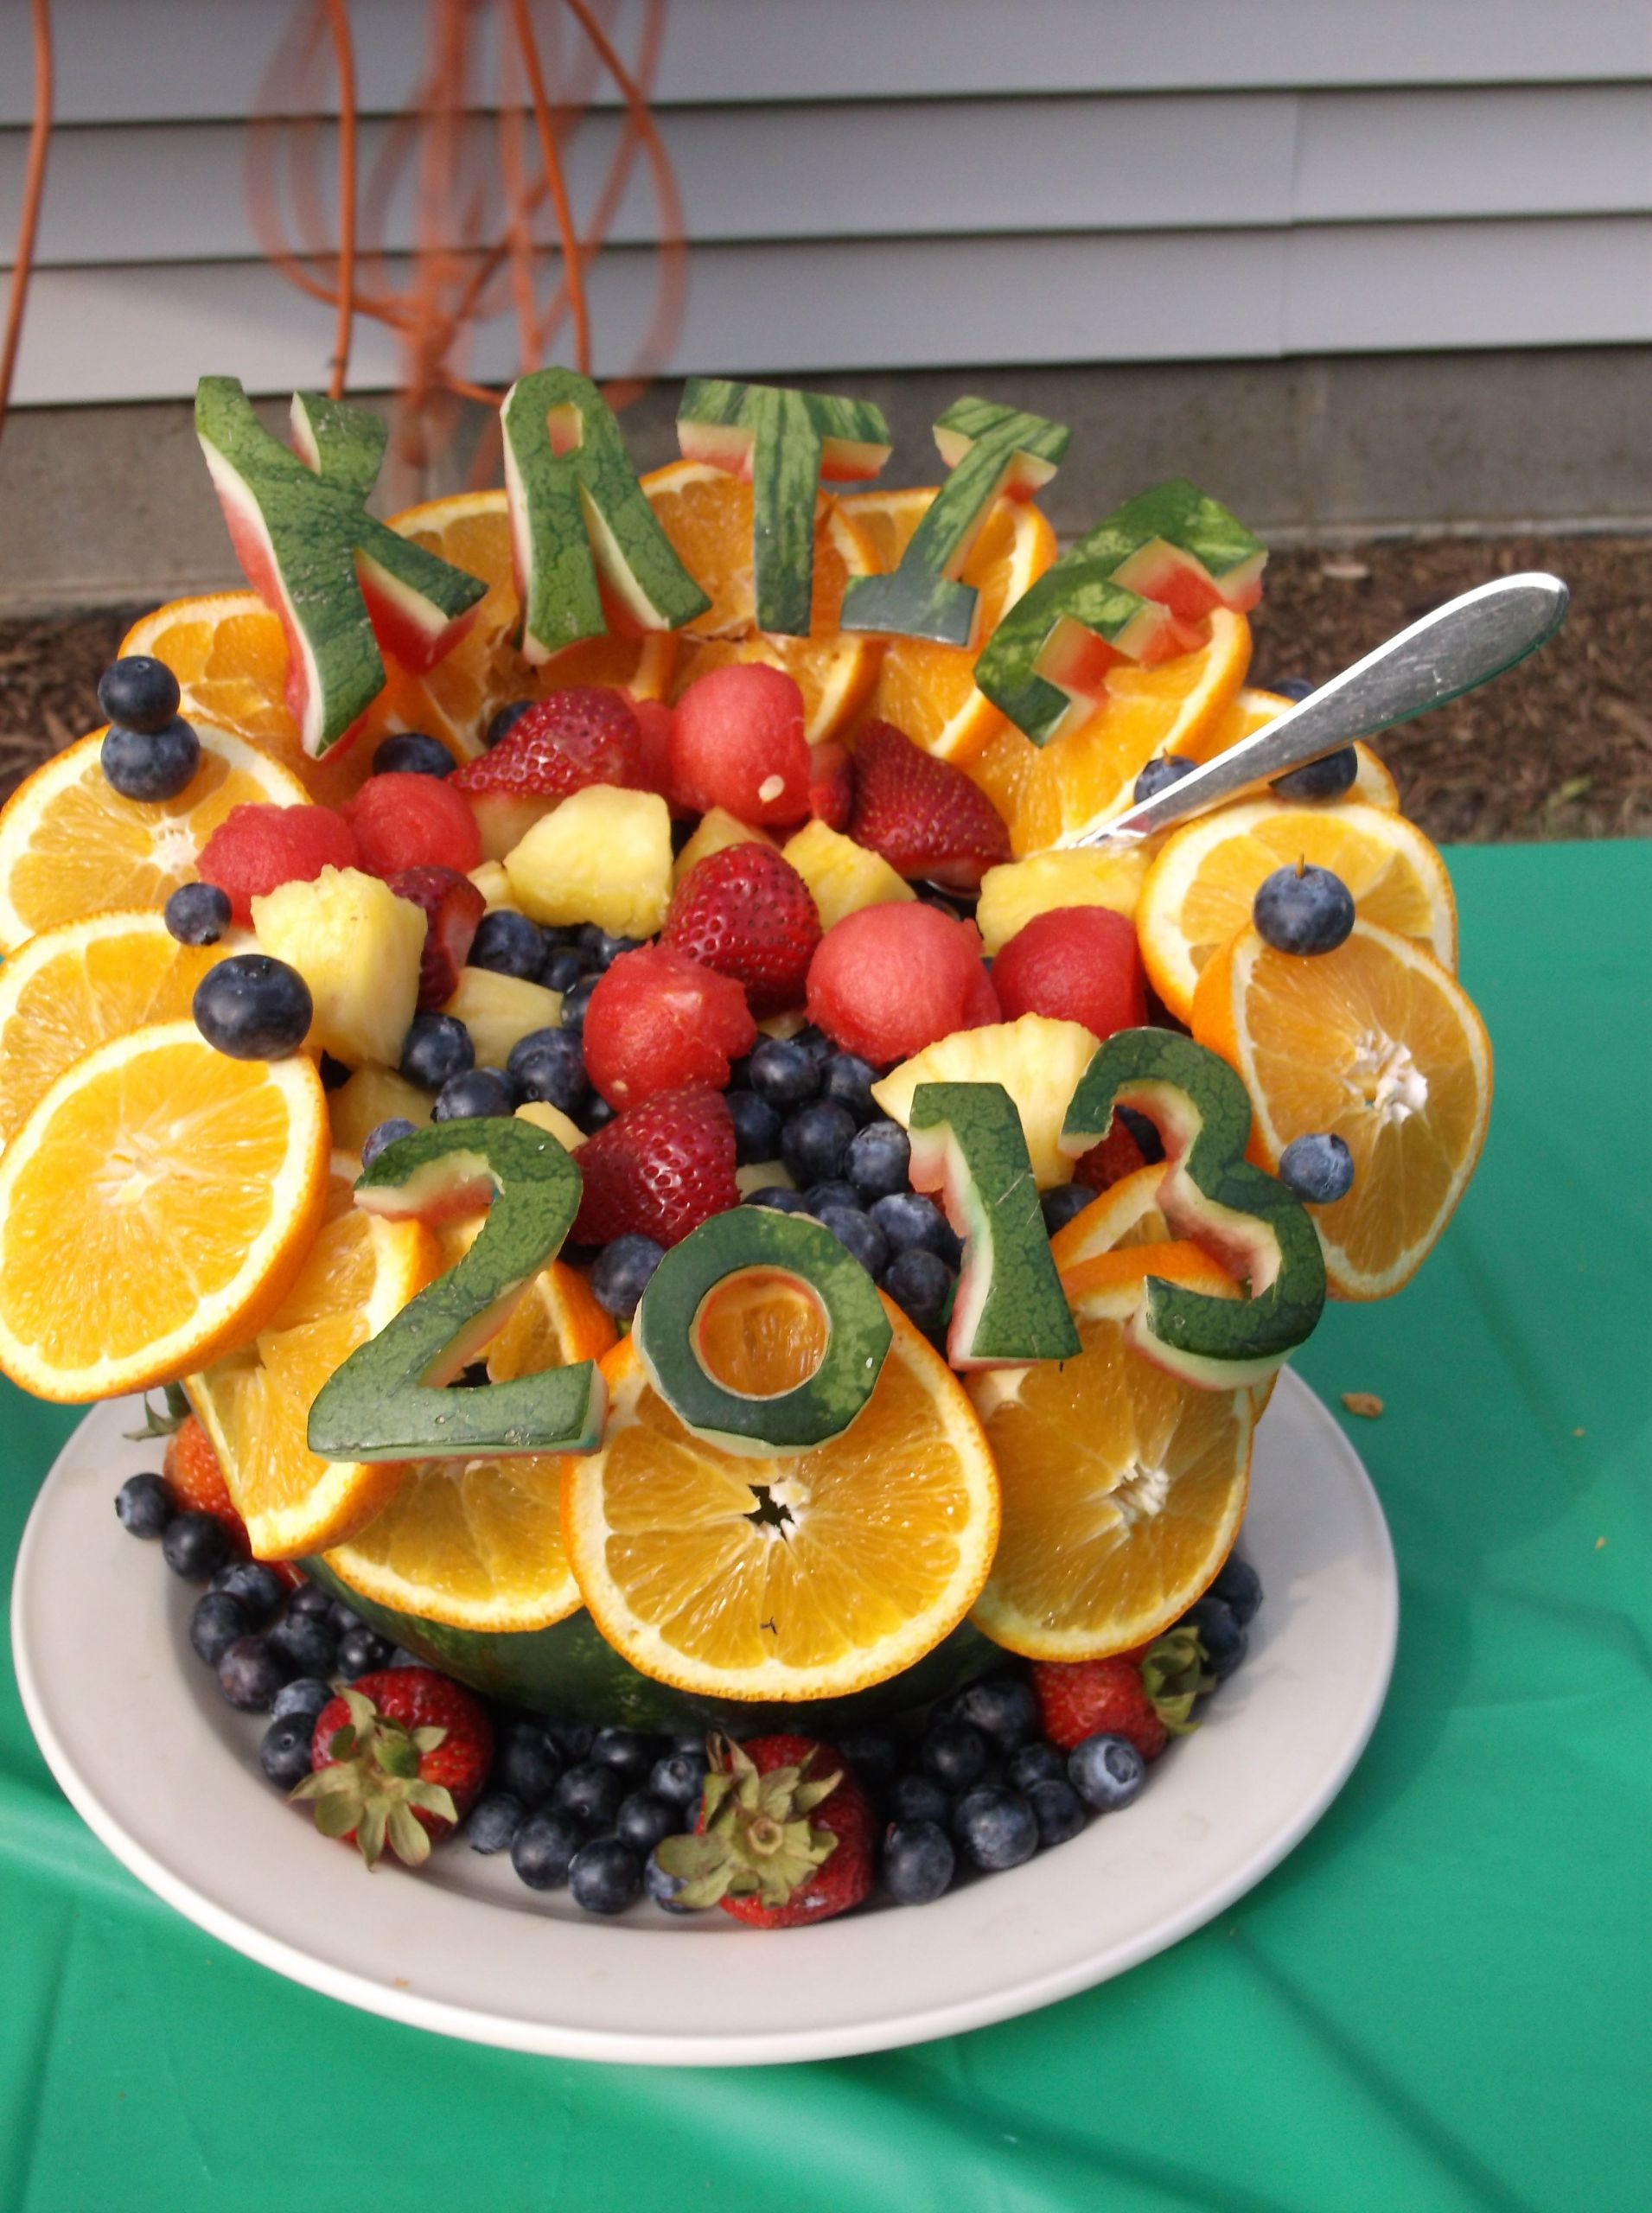 Fruit Tray Ideas For Graduation Party
 Graduation Party Fruit Bowl